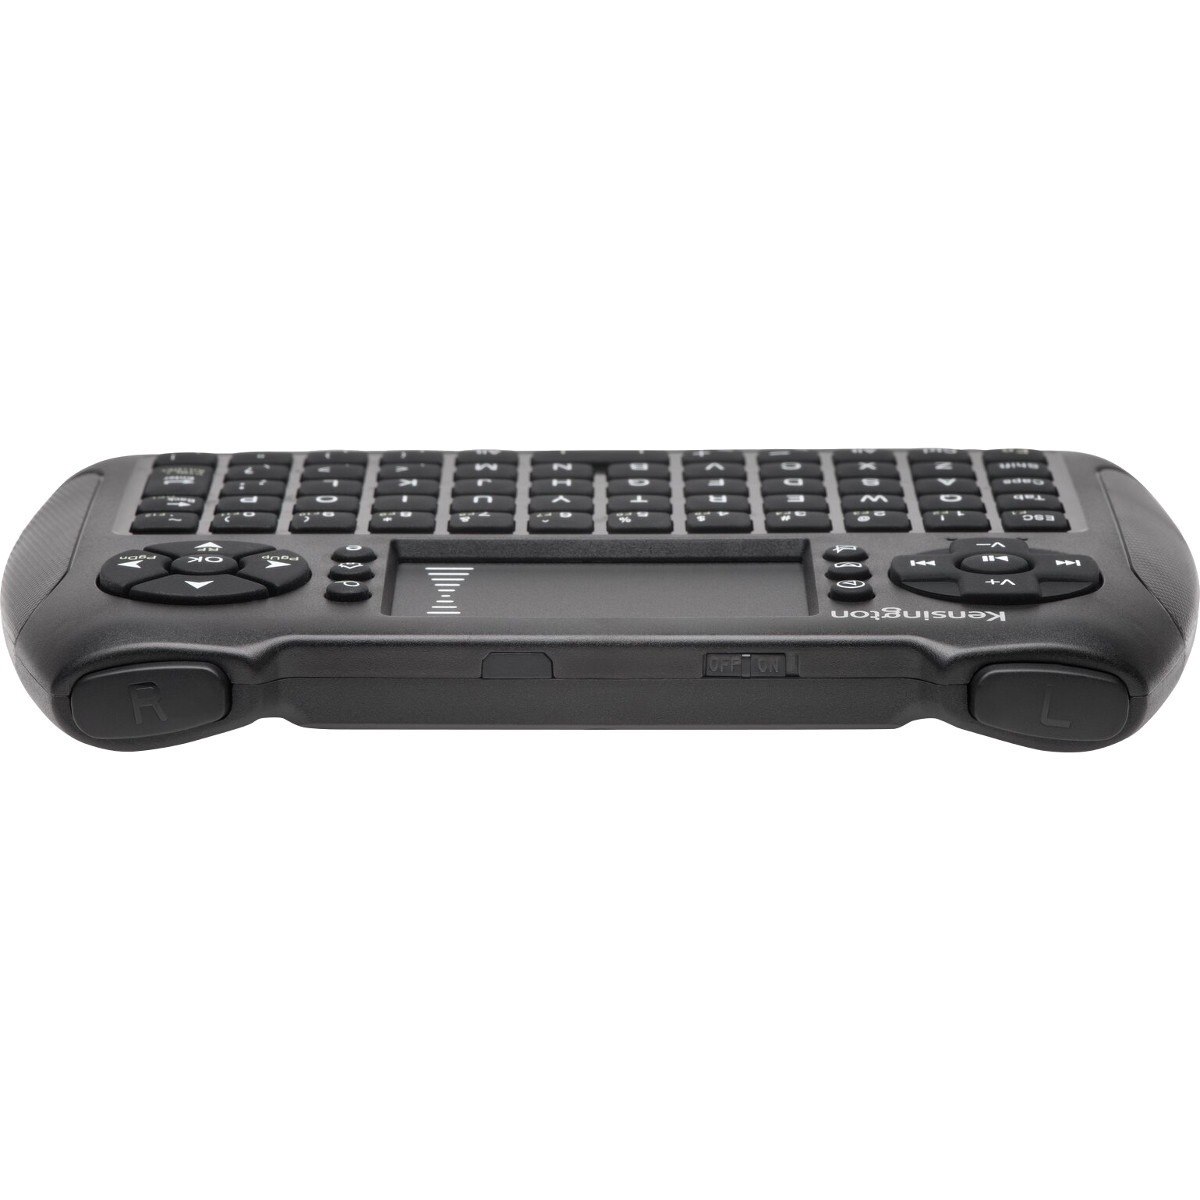 Kensington Wireless Handheld Keyboard